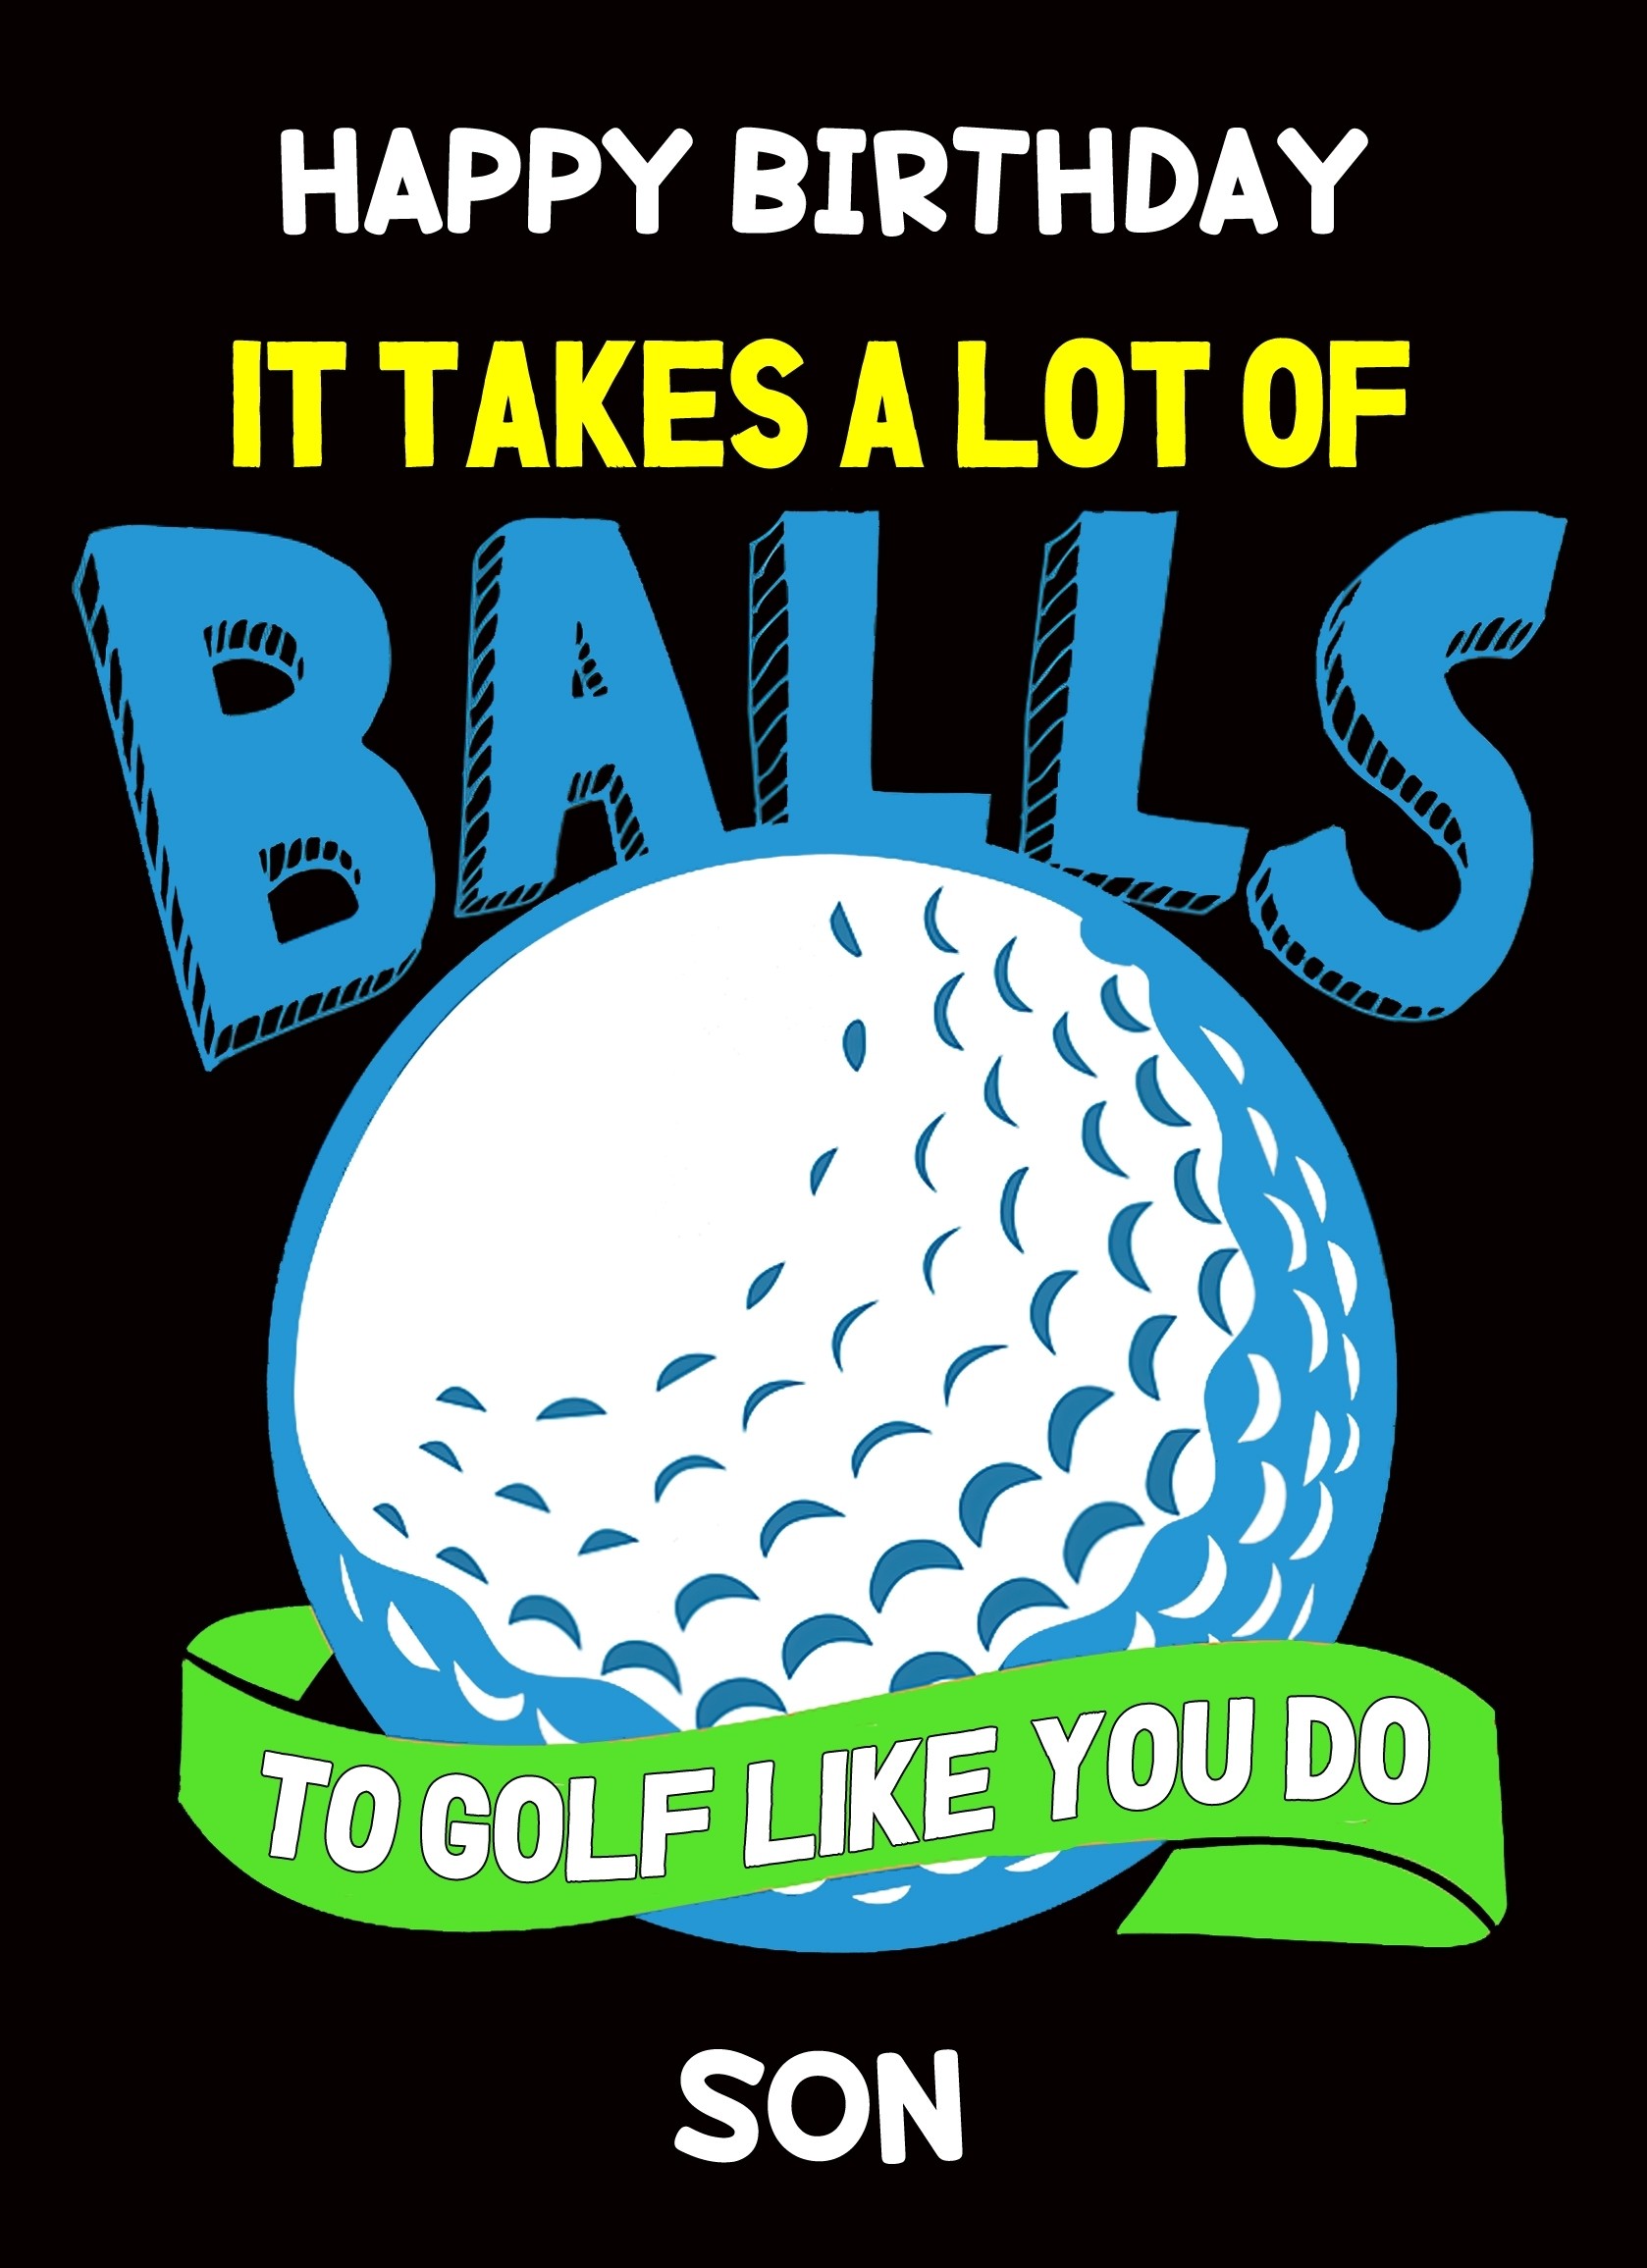 Funny Golf Birthday Card for Son (Design 2)